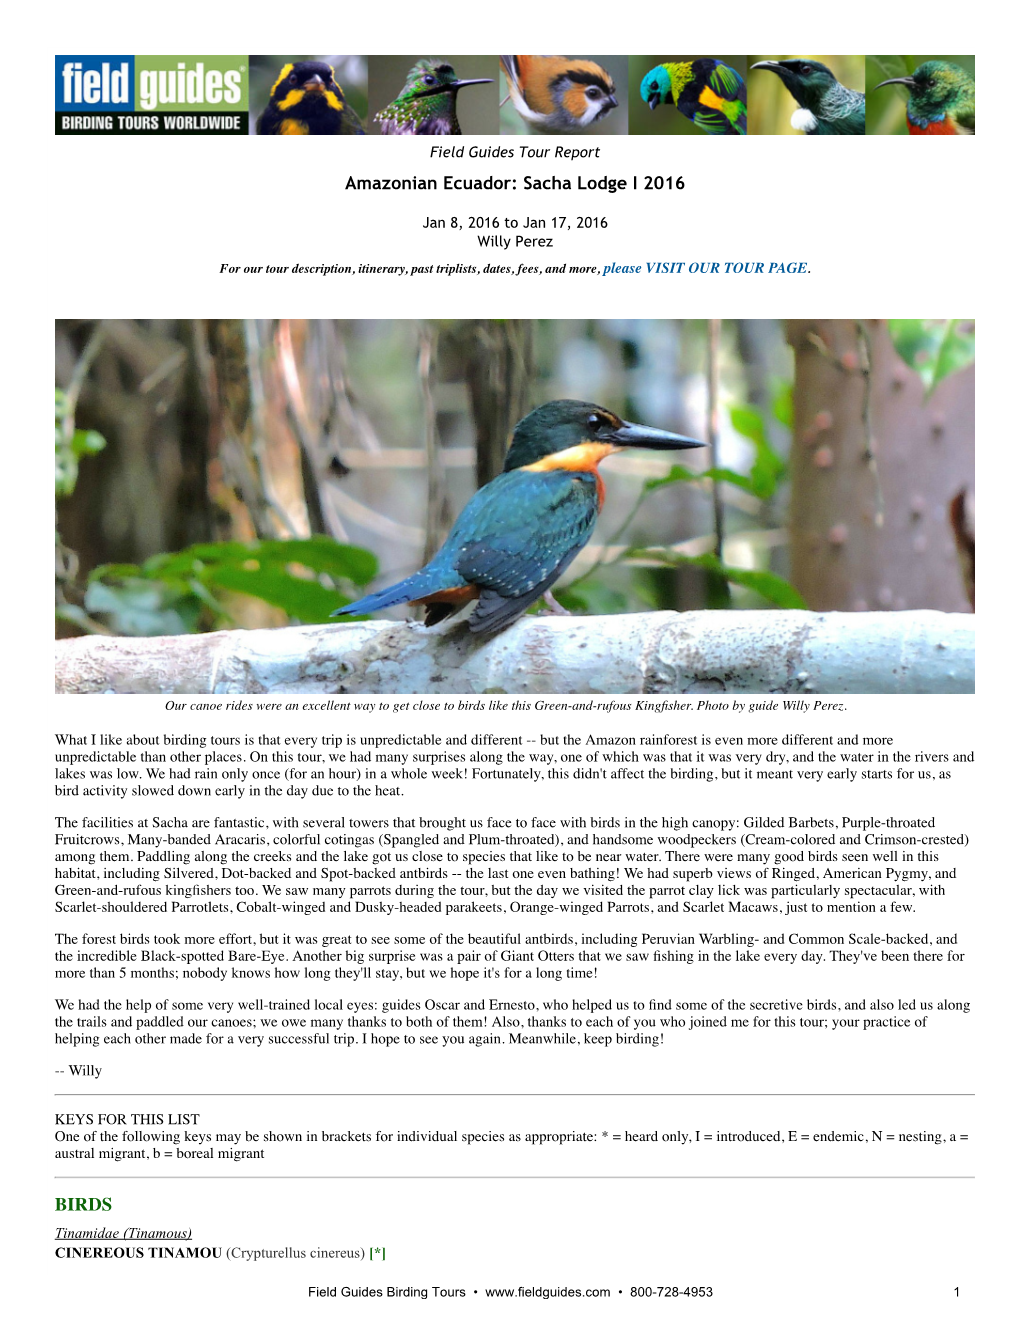 Amazonian Ecuador: Sacha Lodge I 2016 BIRDS